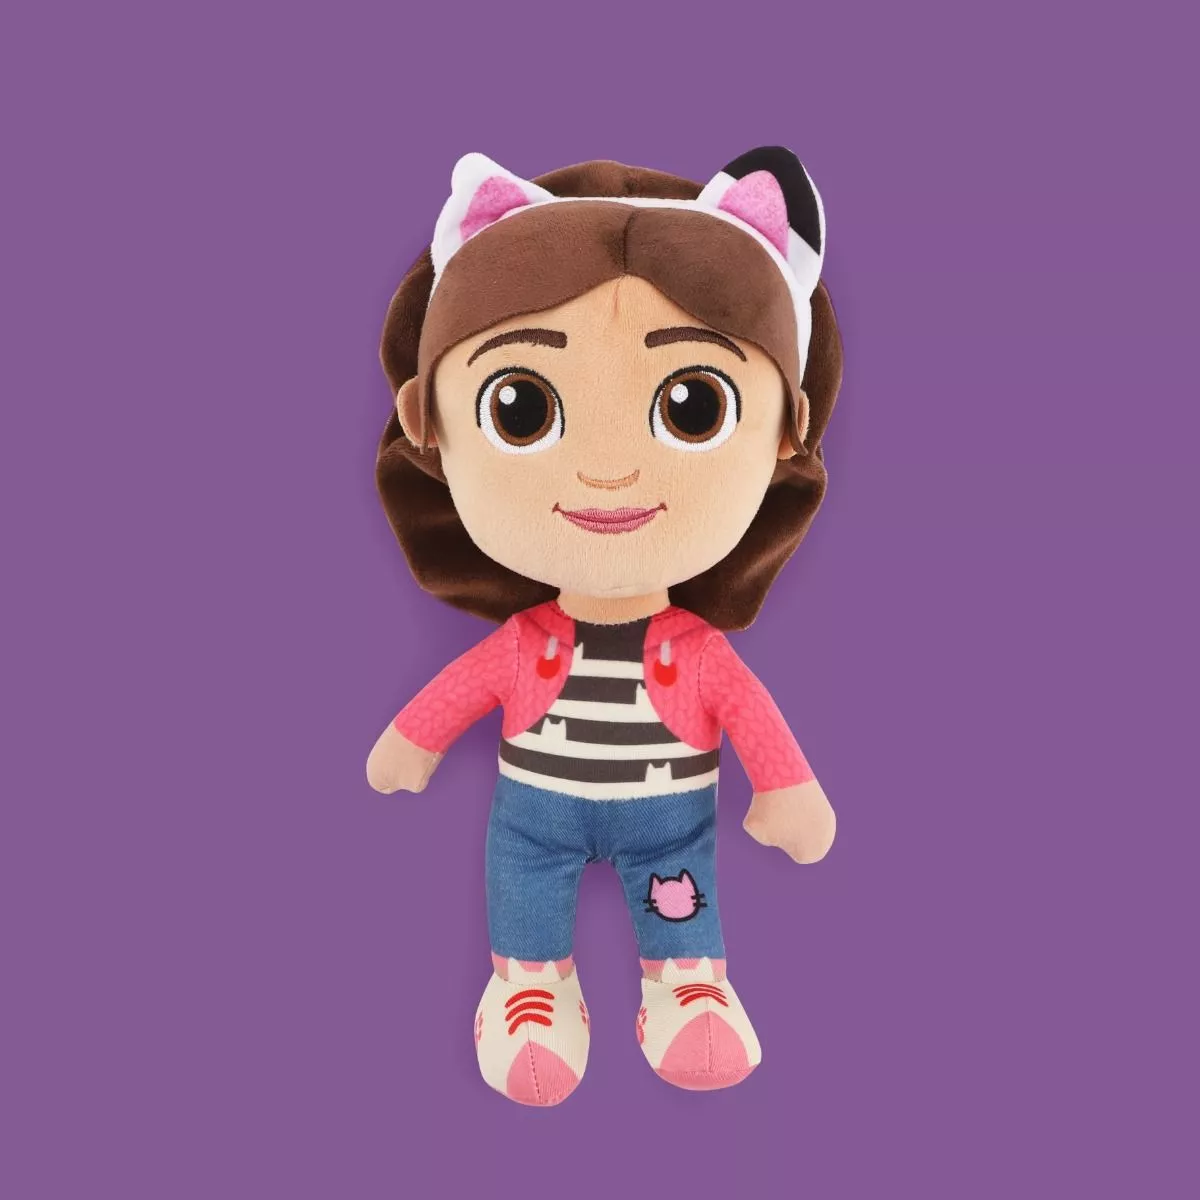 Gabby from Gabby’s Dollhouse soft toy